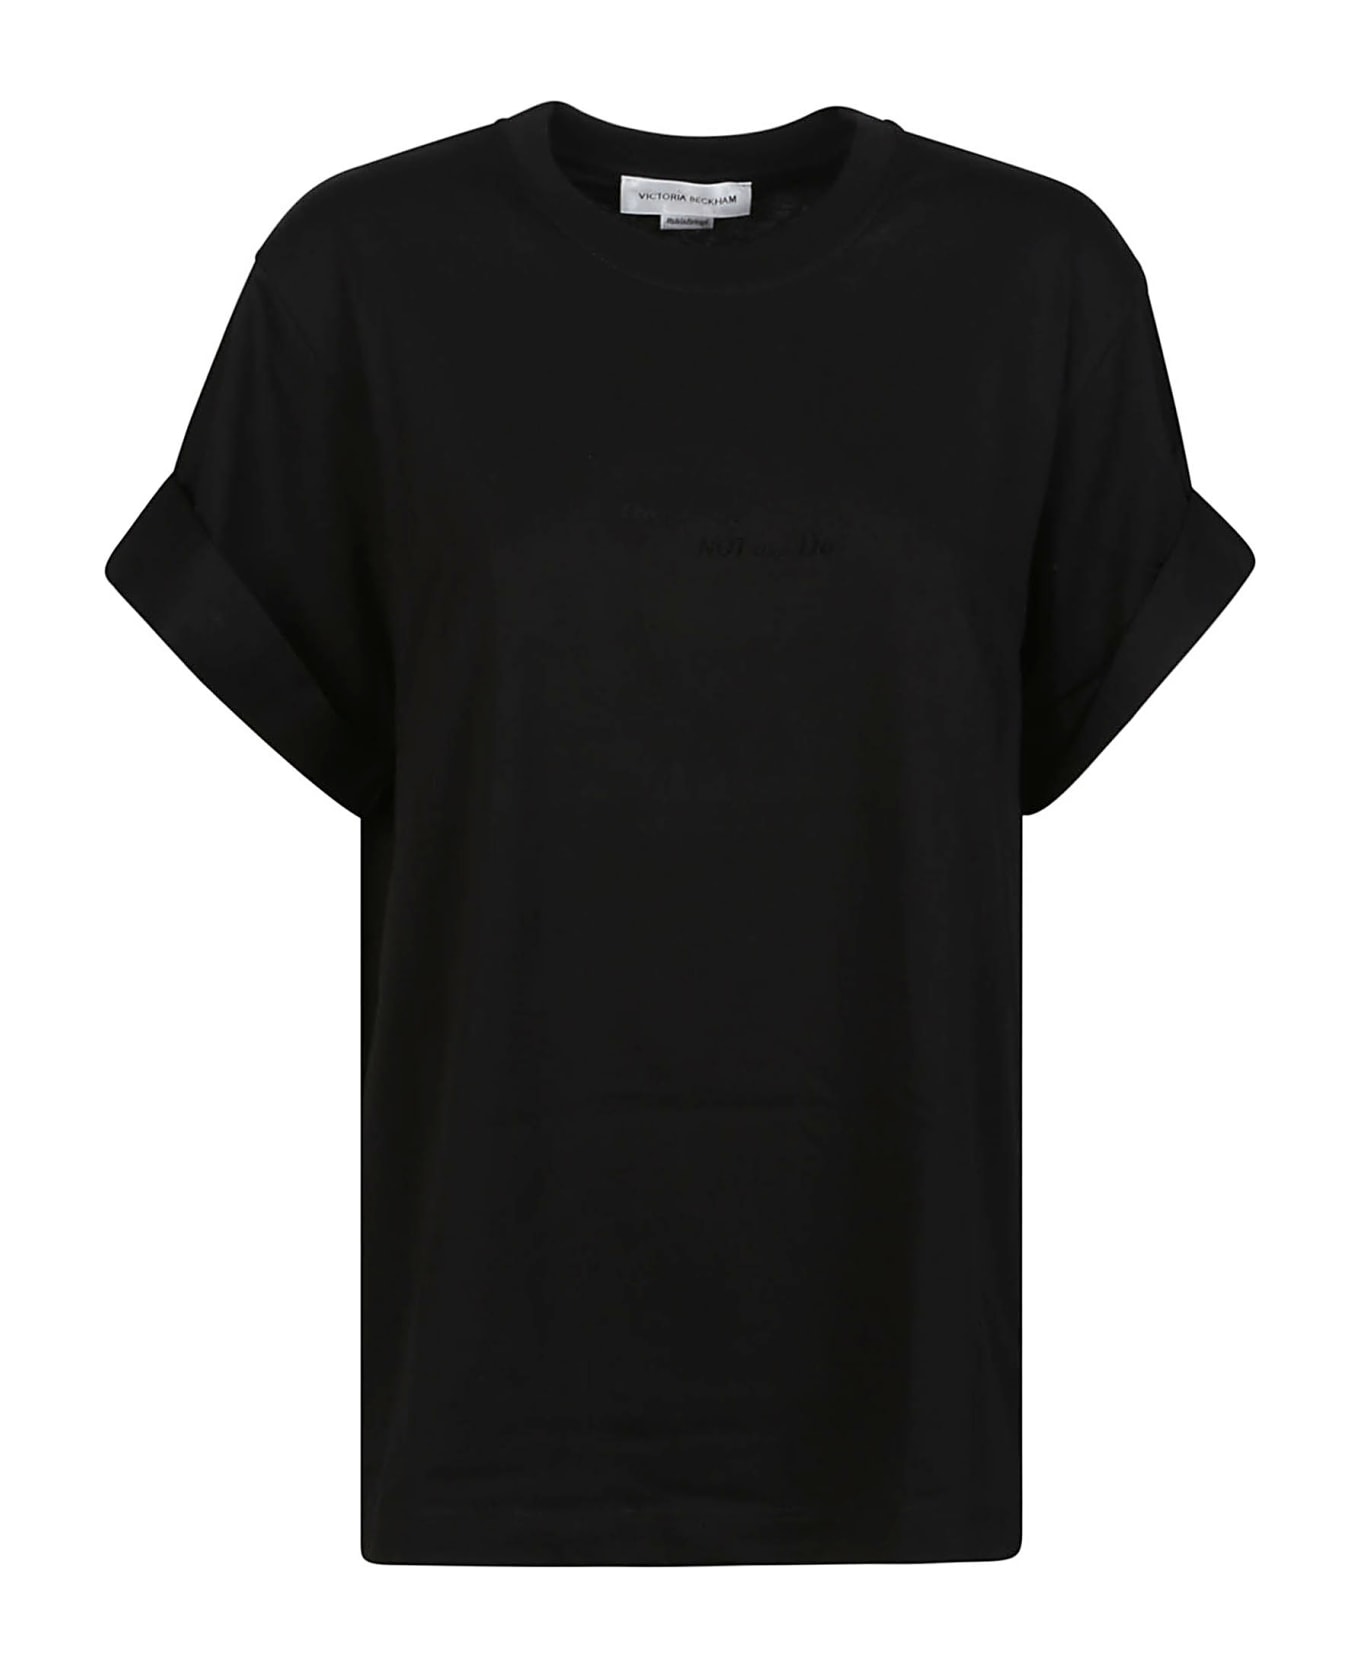 Victoria Beckham Slogan T-shirt - Black